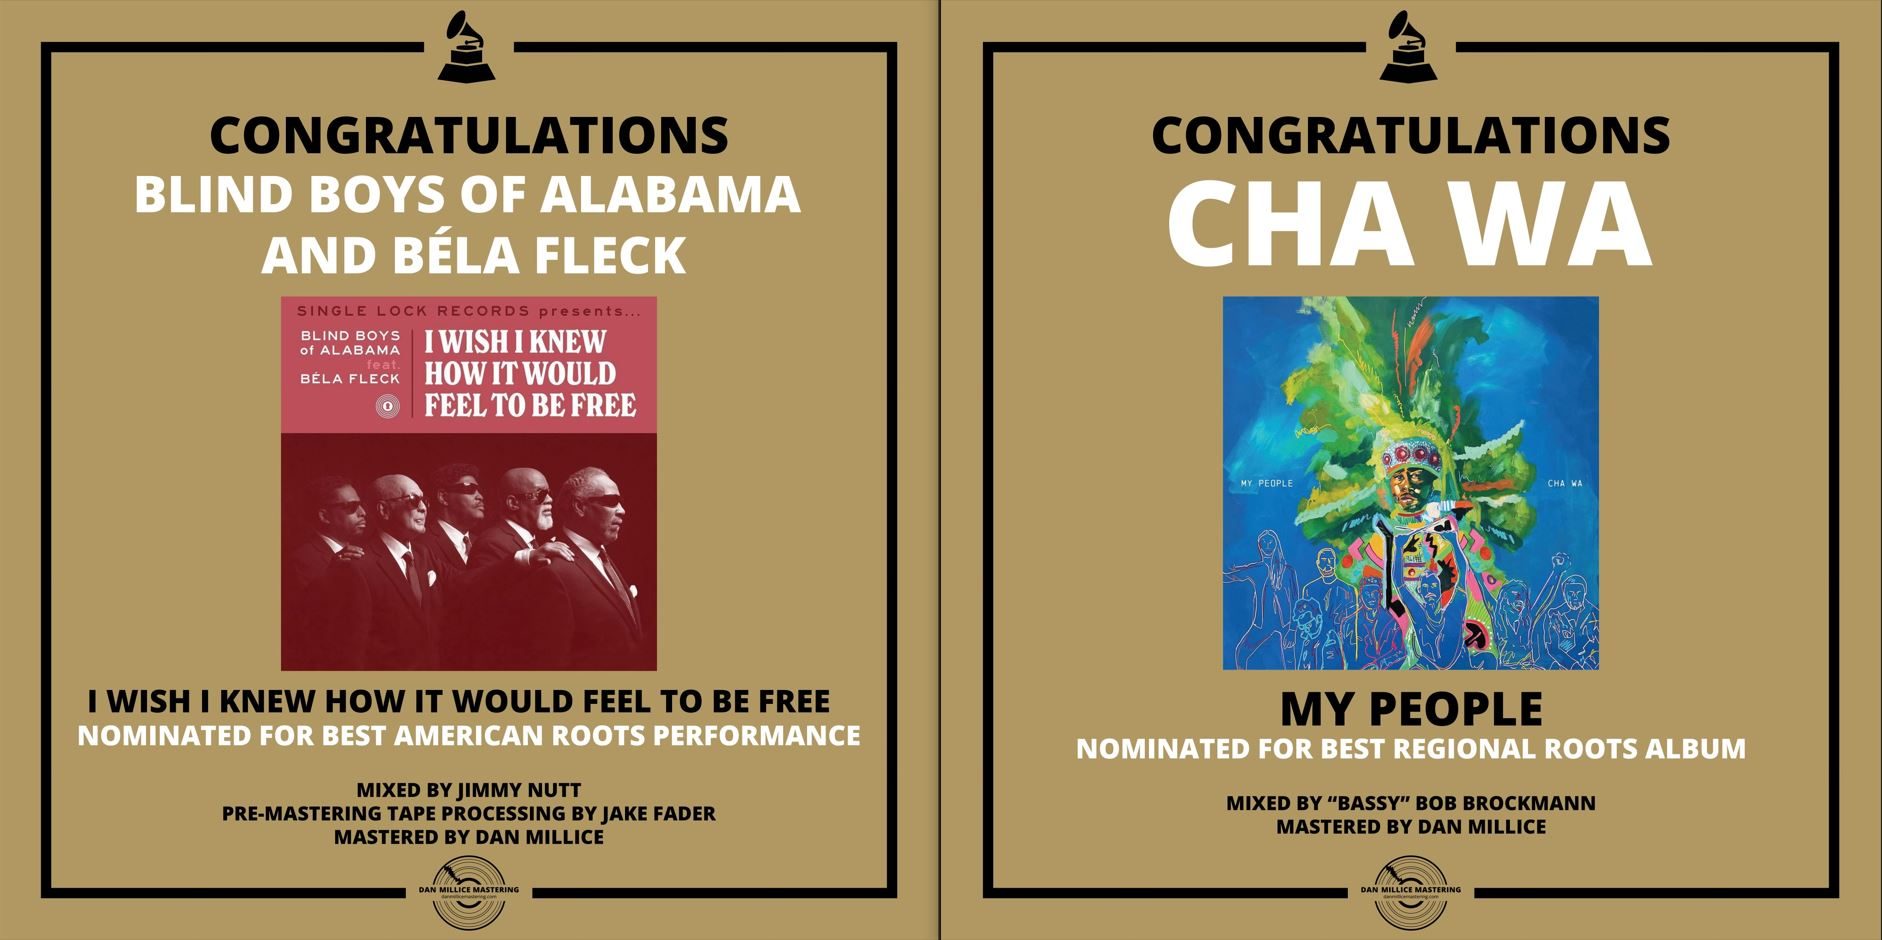 Dan Millice Mastering - 64th Grammy Nominations - Blind Boys of Alabama Bela Fleck Cha Wa